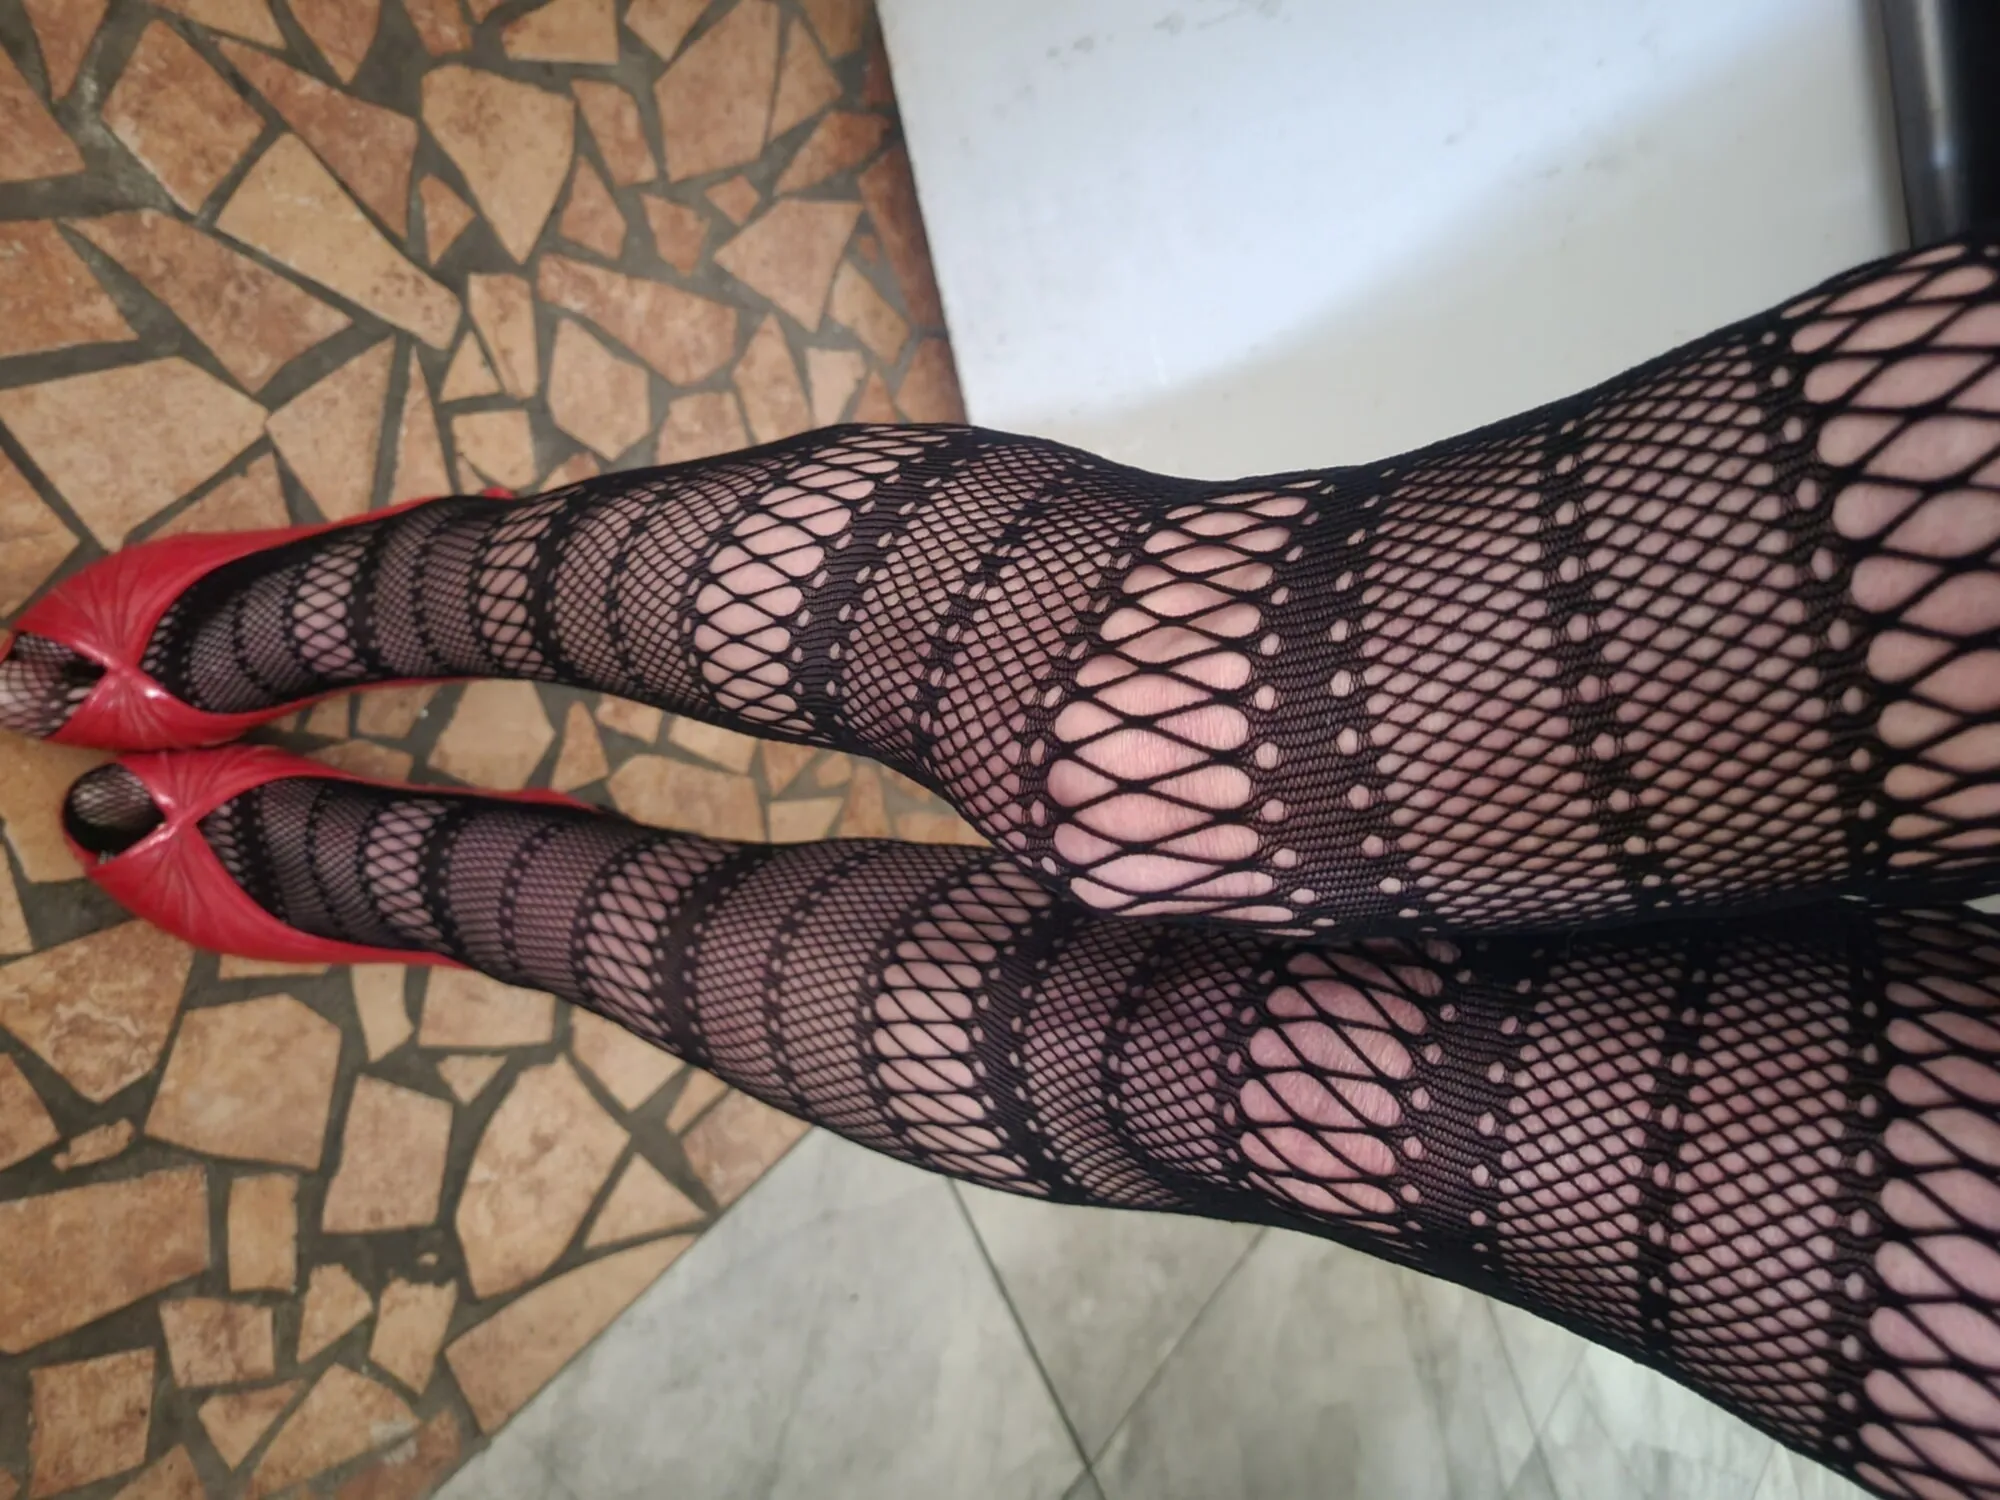 Fishnet legs high heels 👠 